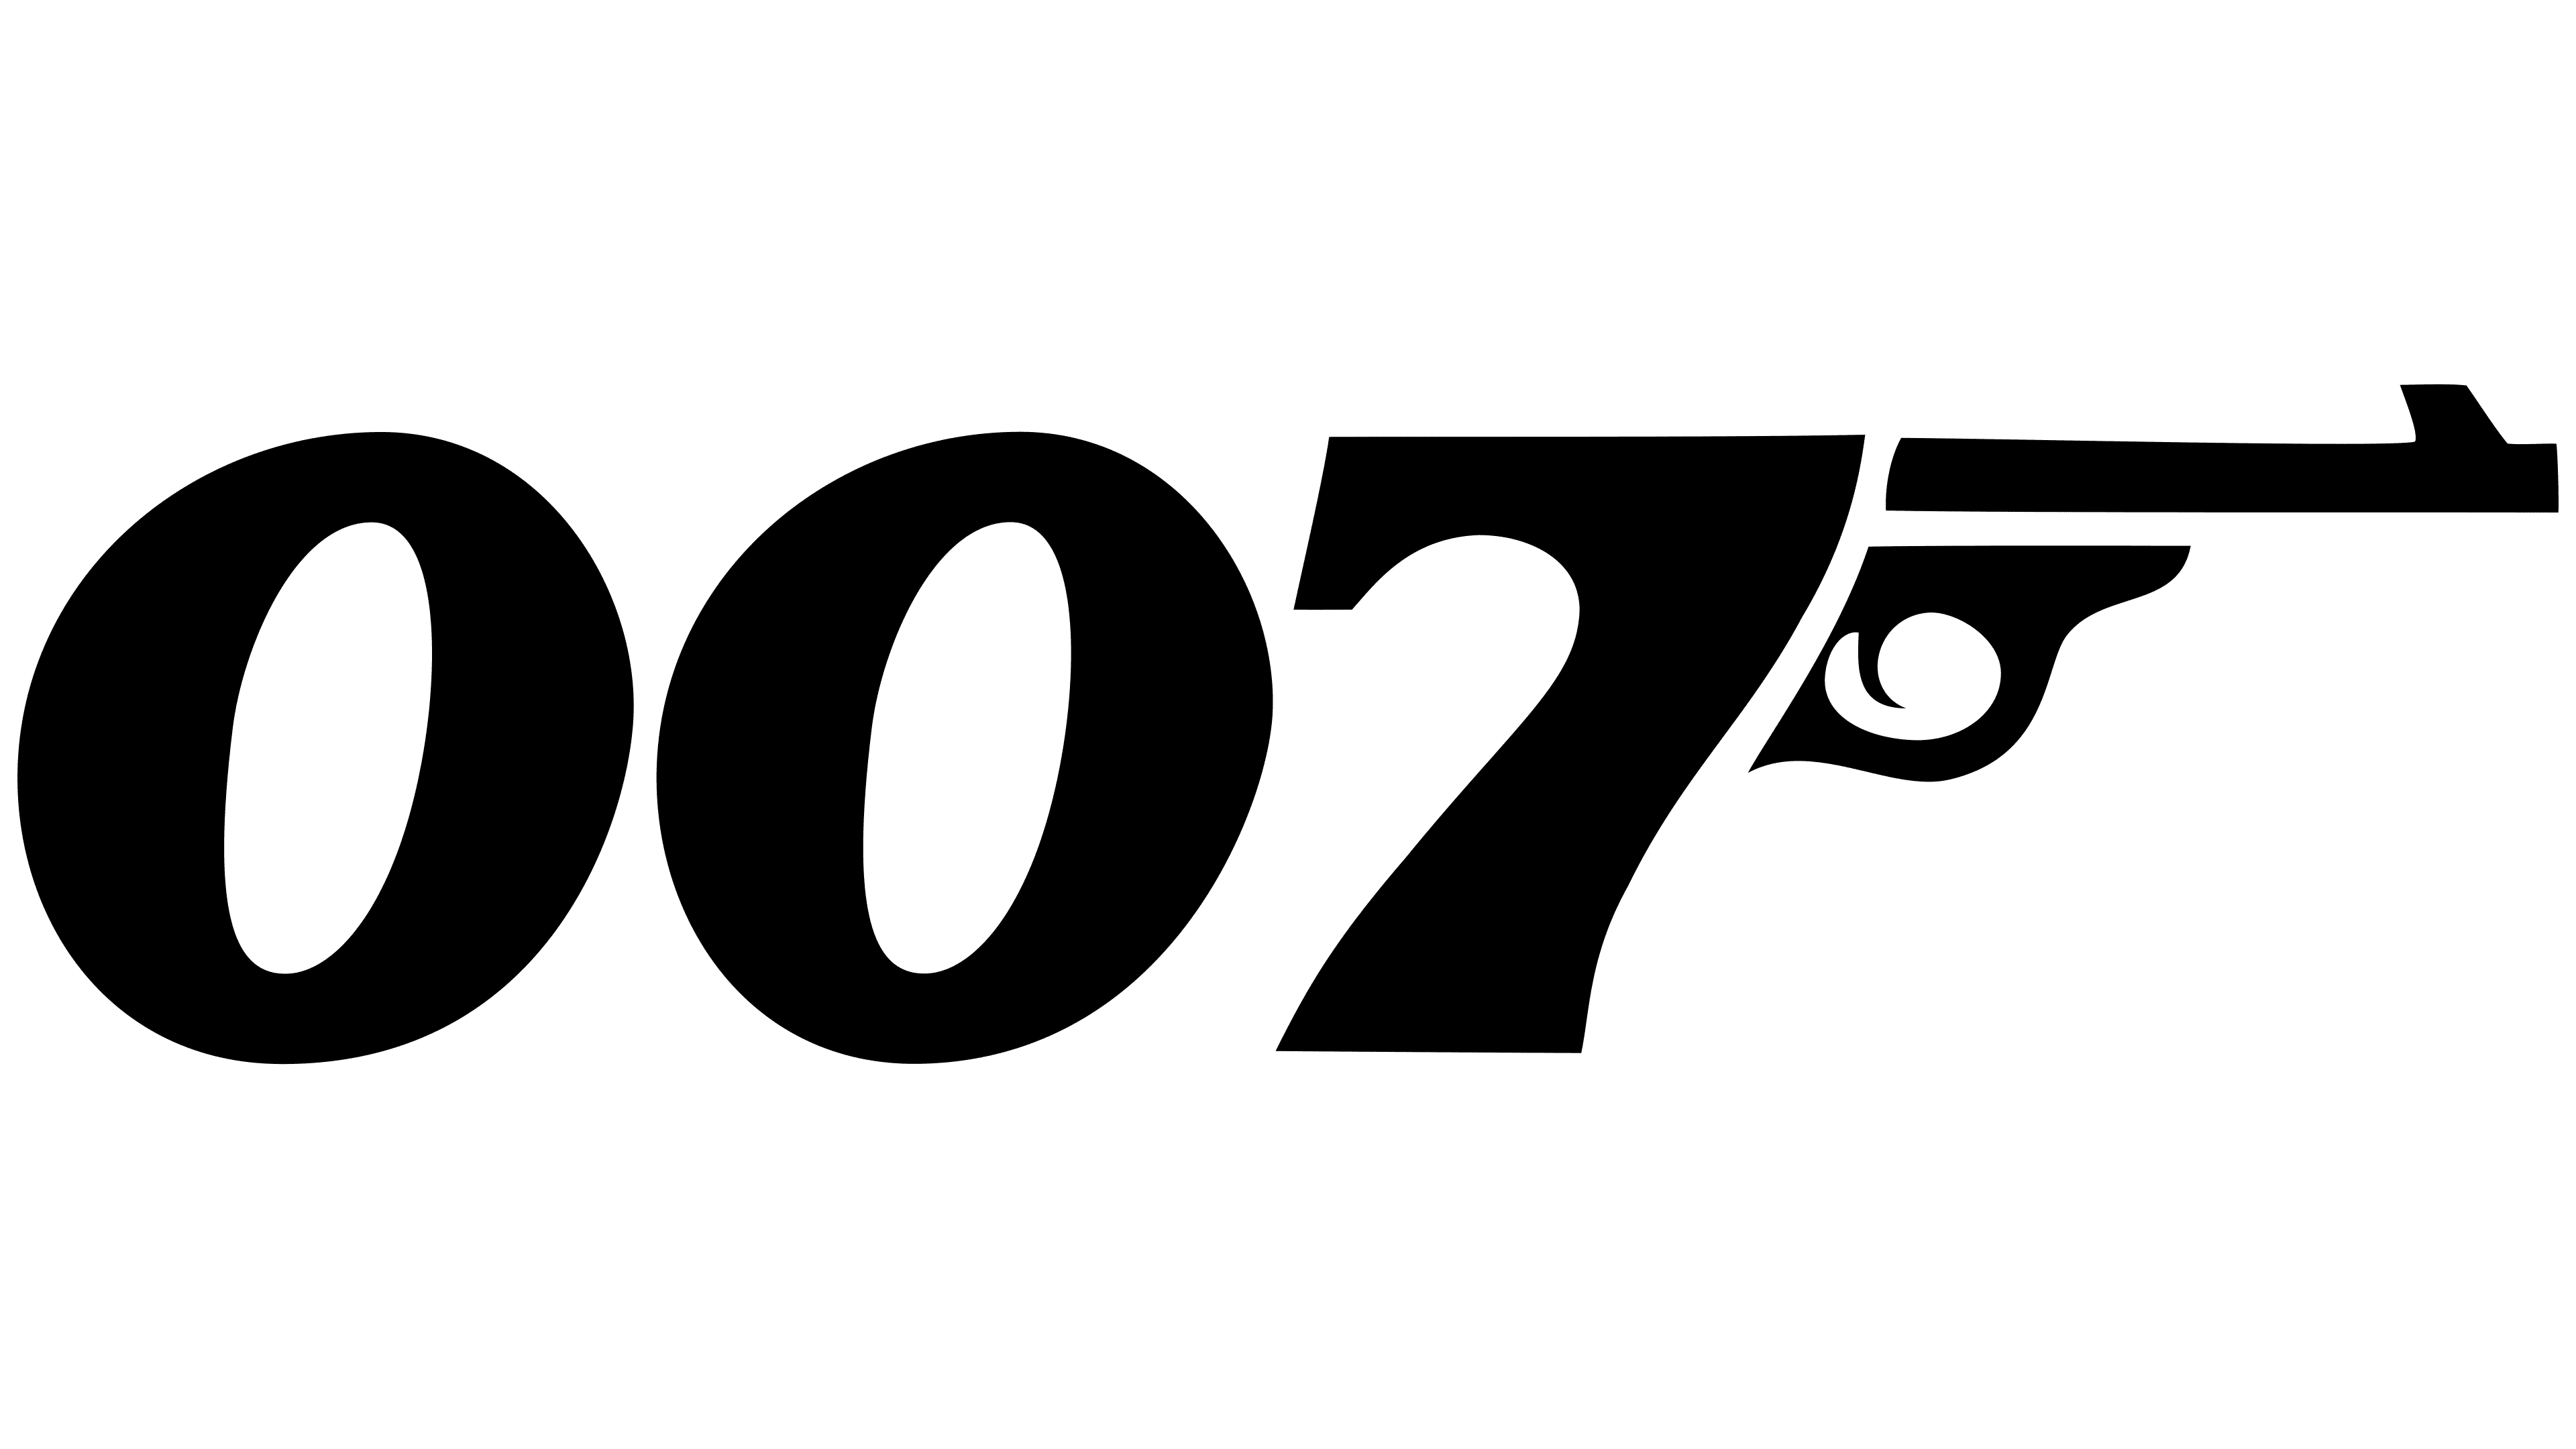 James Bond - 007 logo - in blue Neon - display 60 x 40 cm - Catawiki